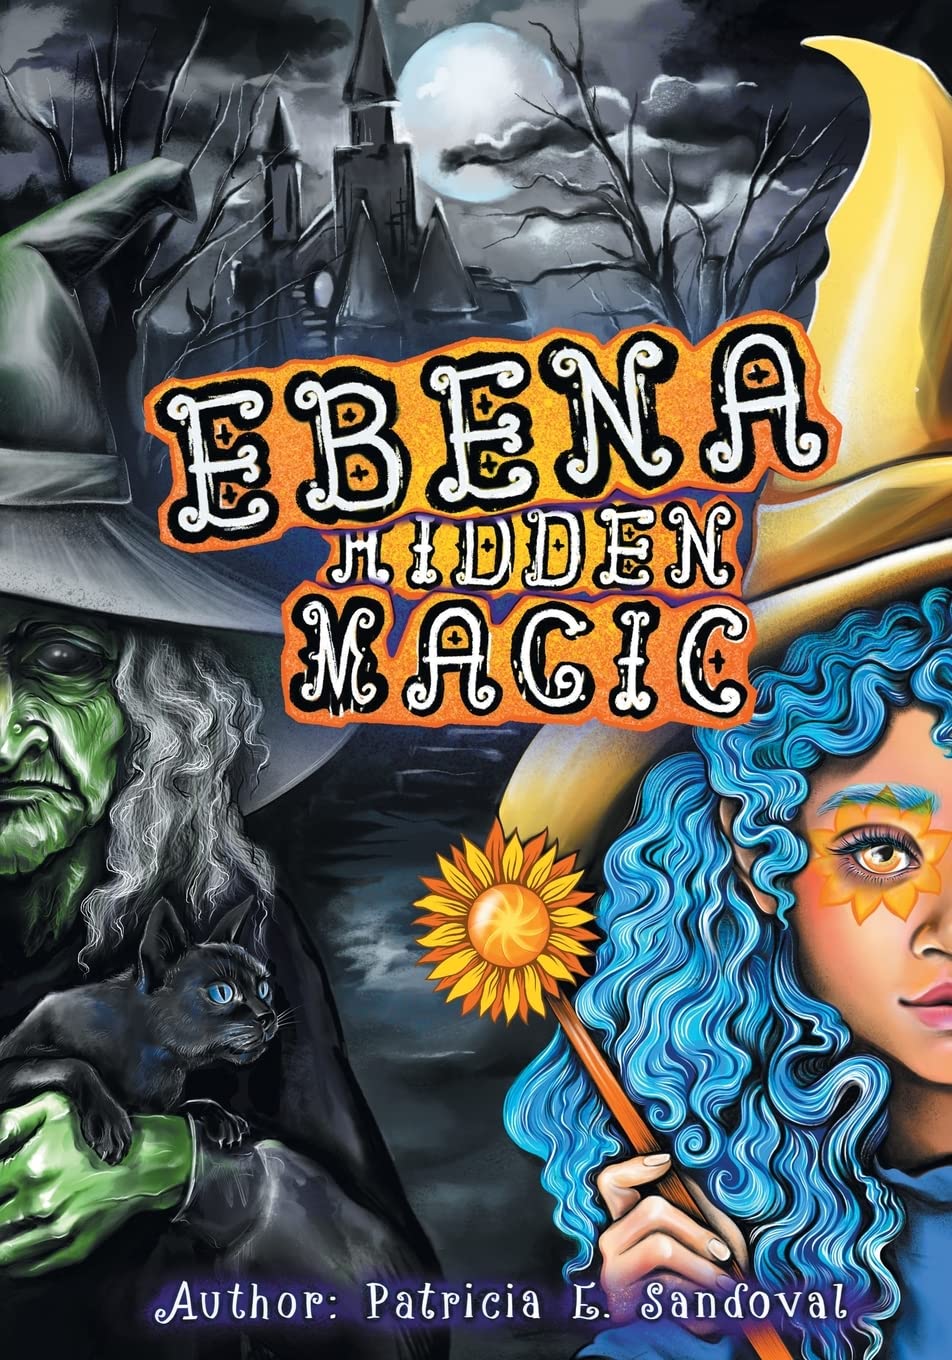 Author's Tranquility Press Releases New Book: "Ebena: Hidden Magic"